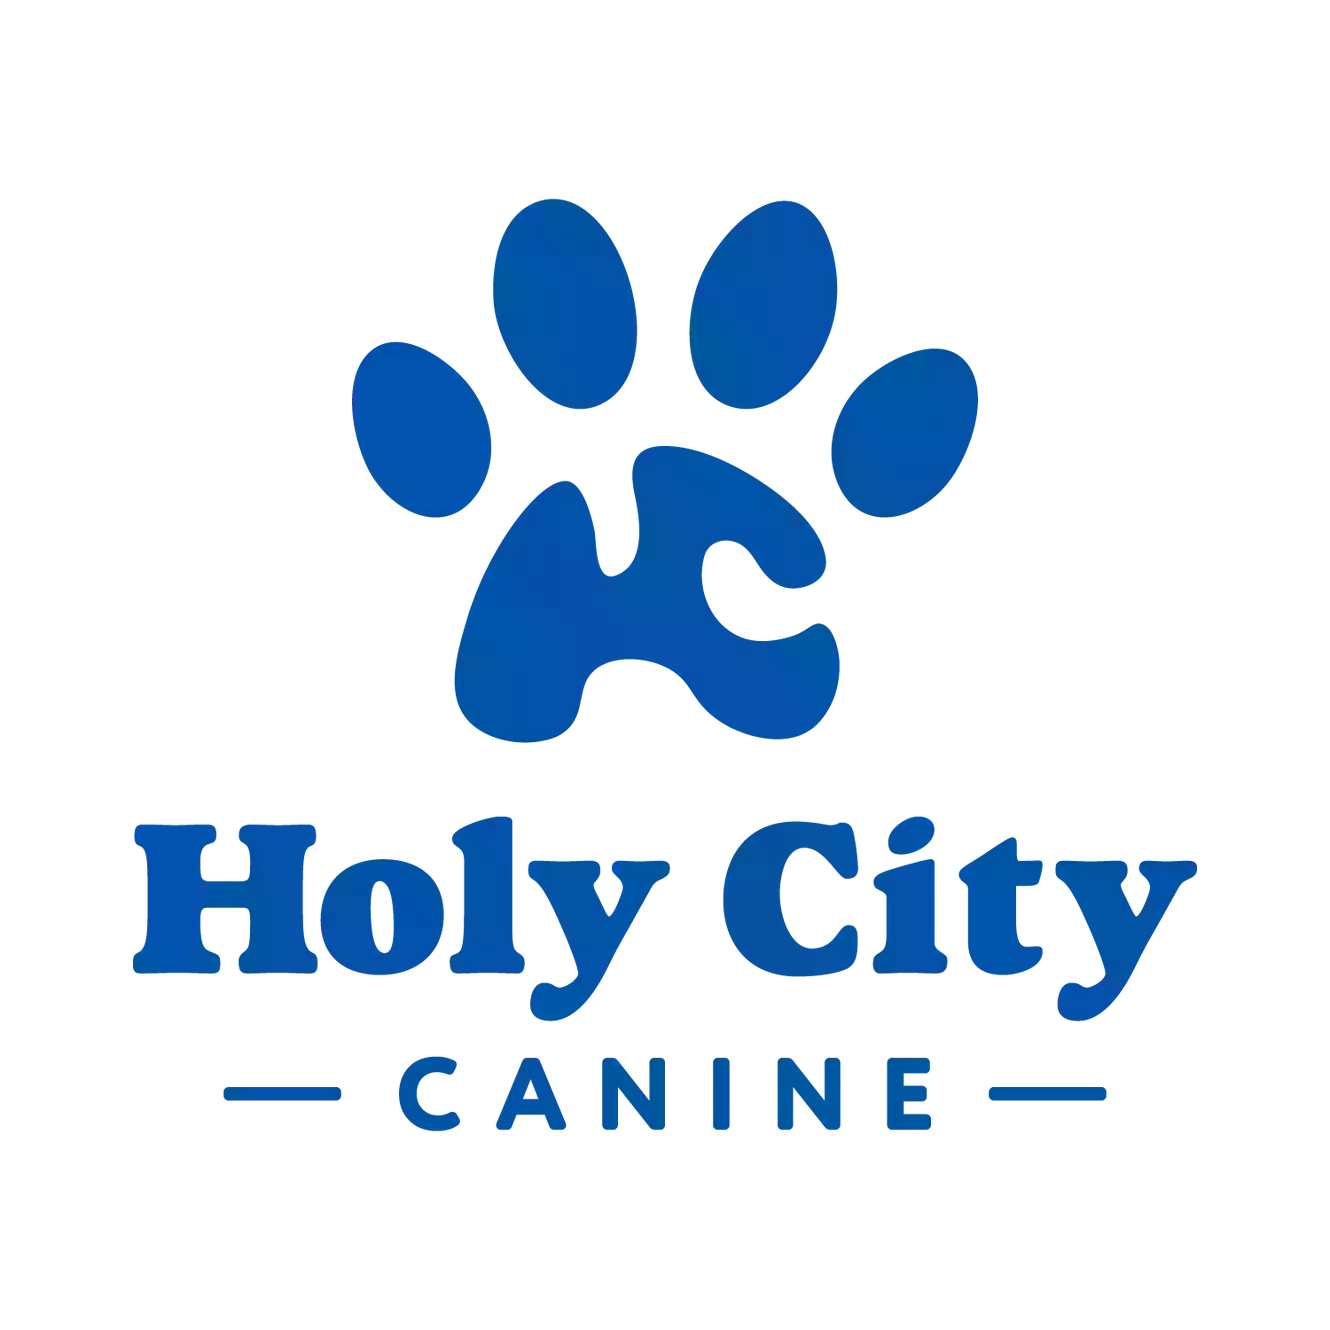 Holy City Canine